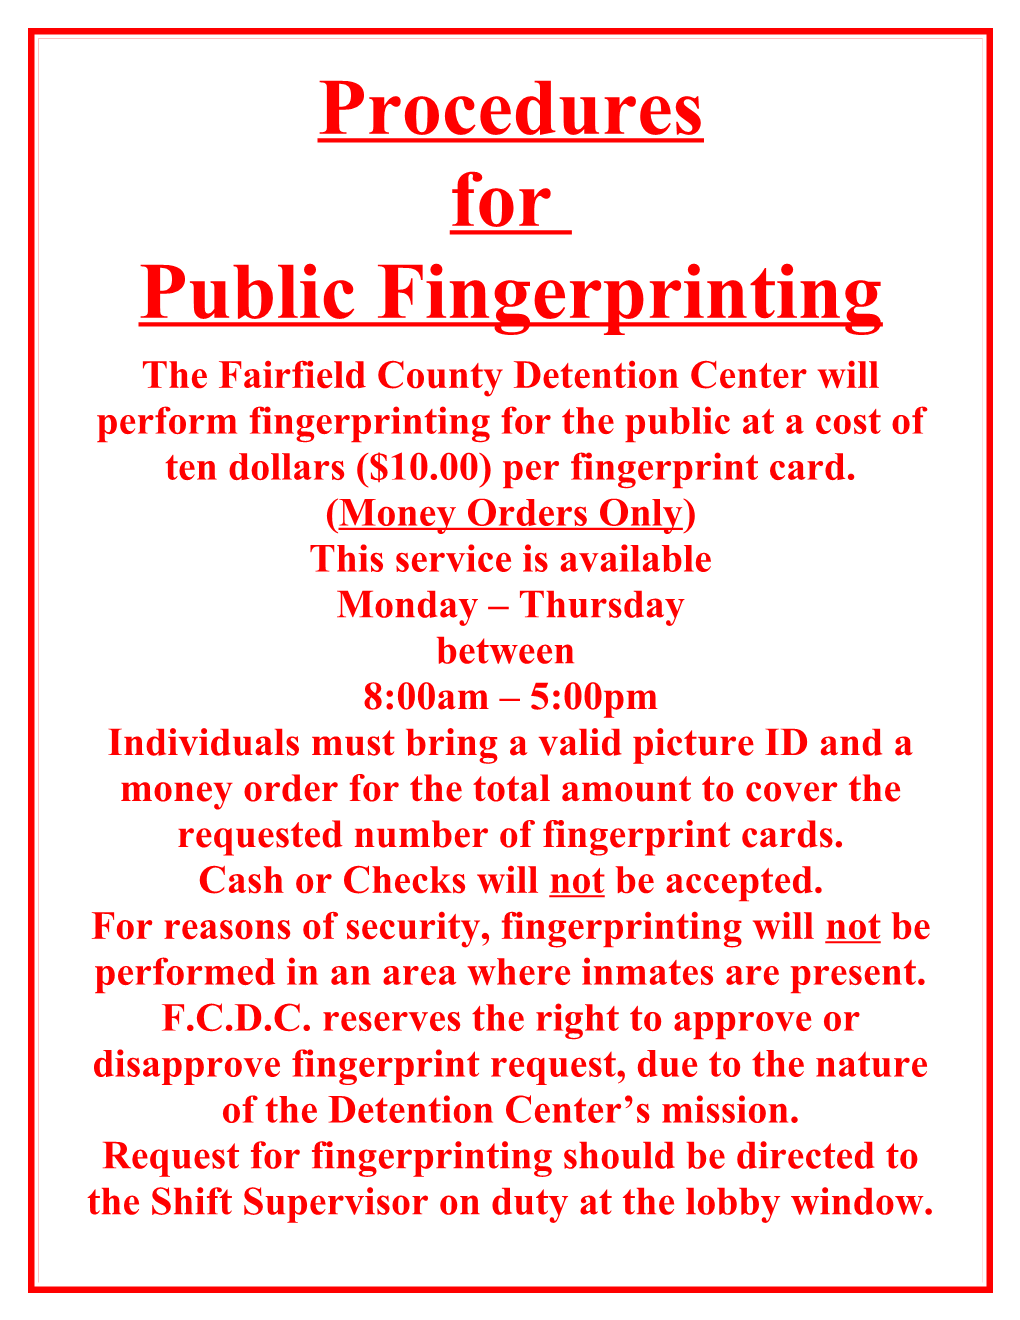 Public Fingerprinting